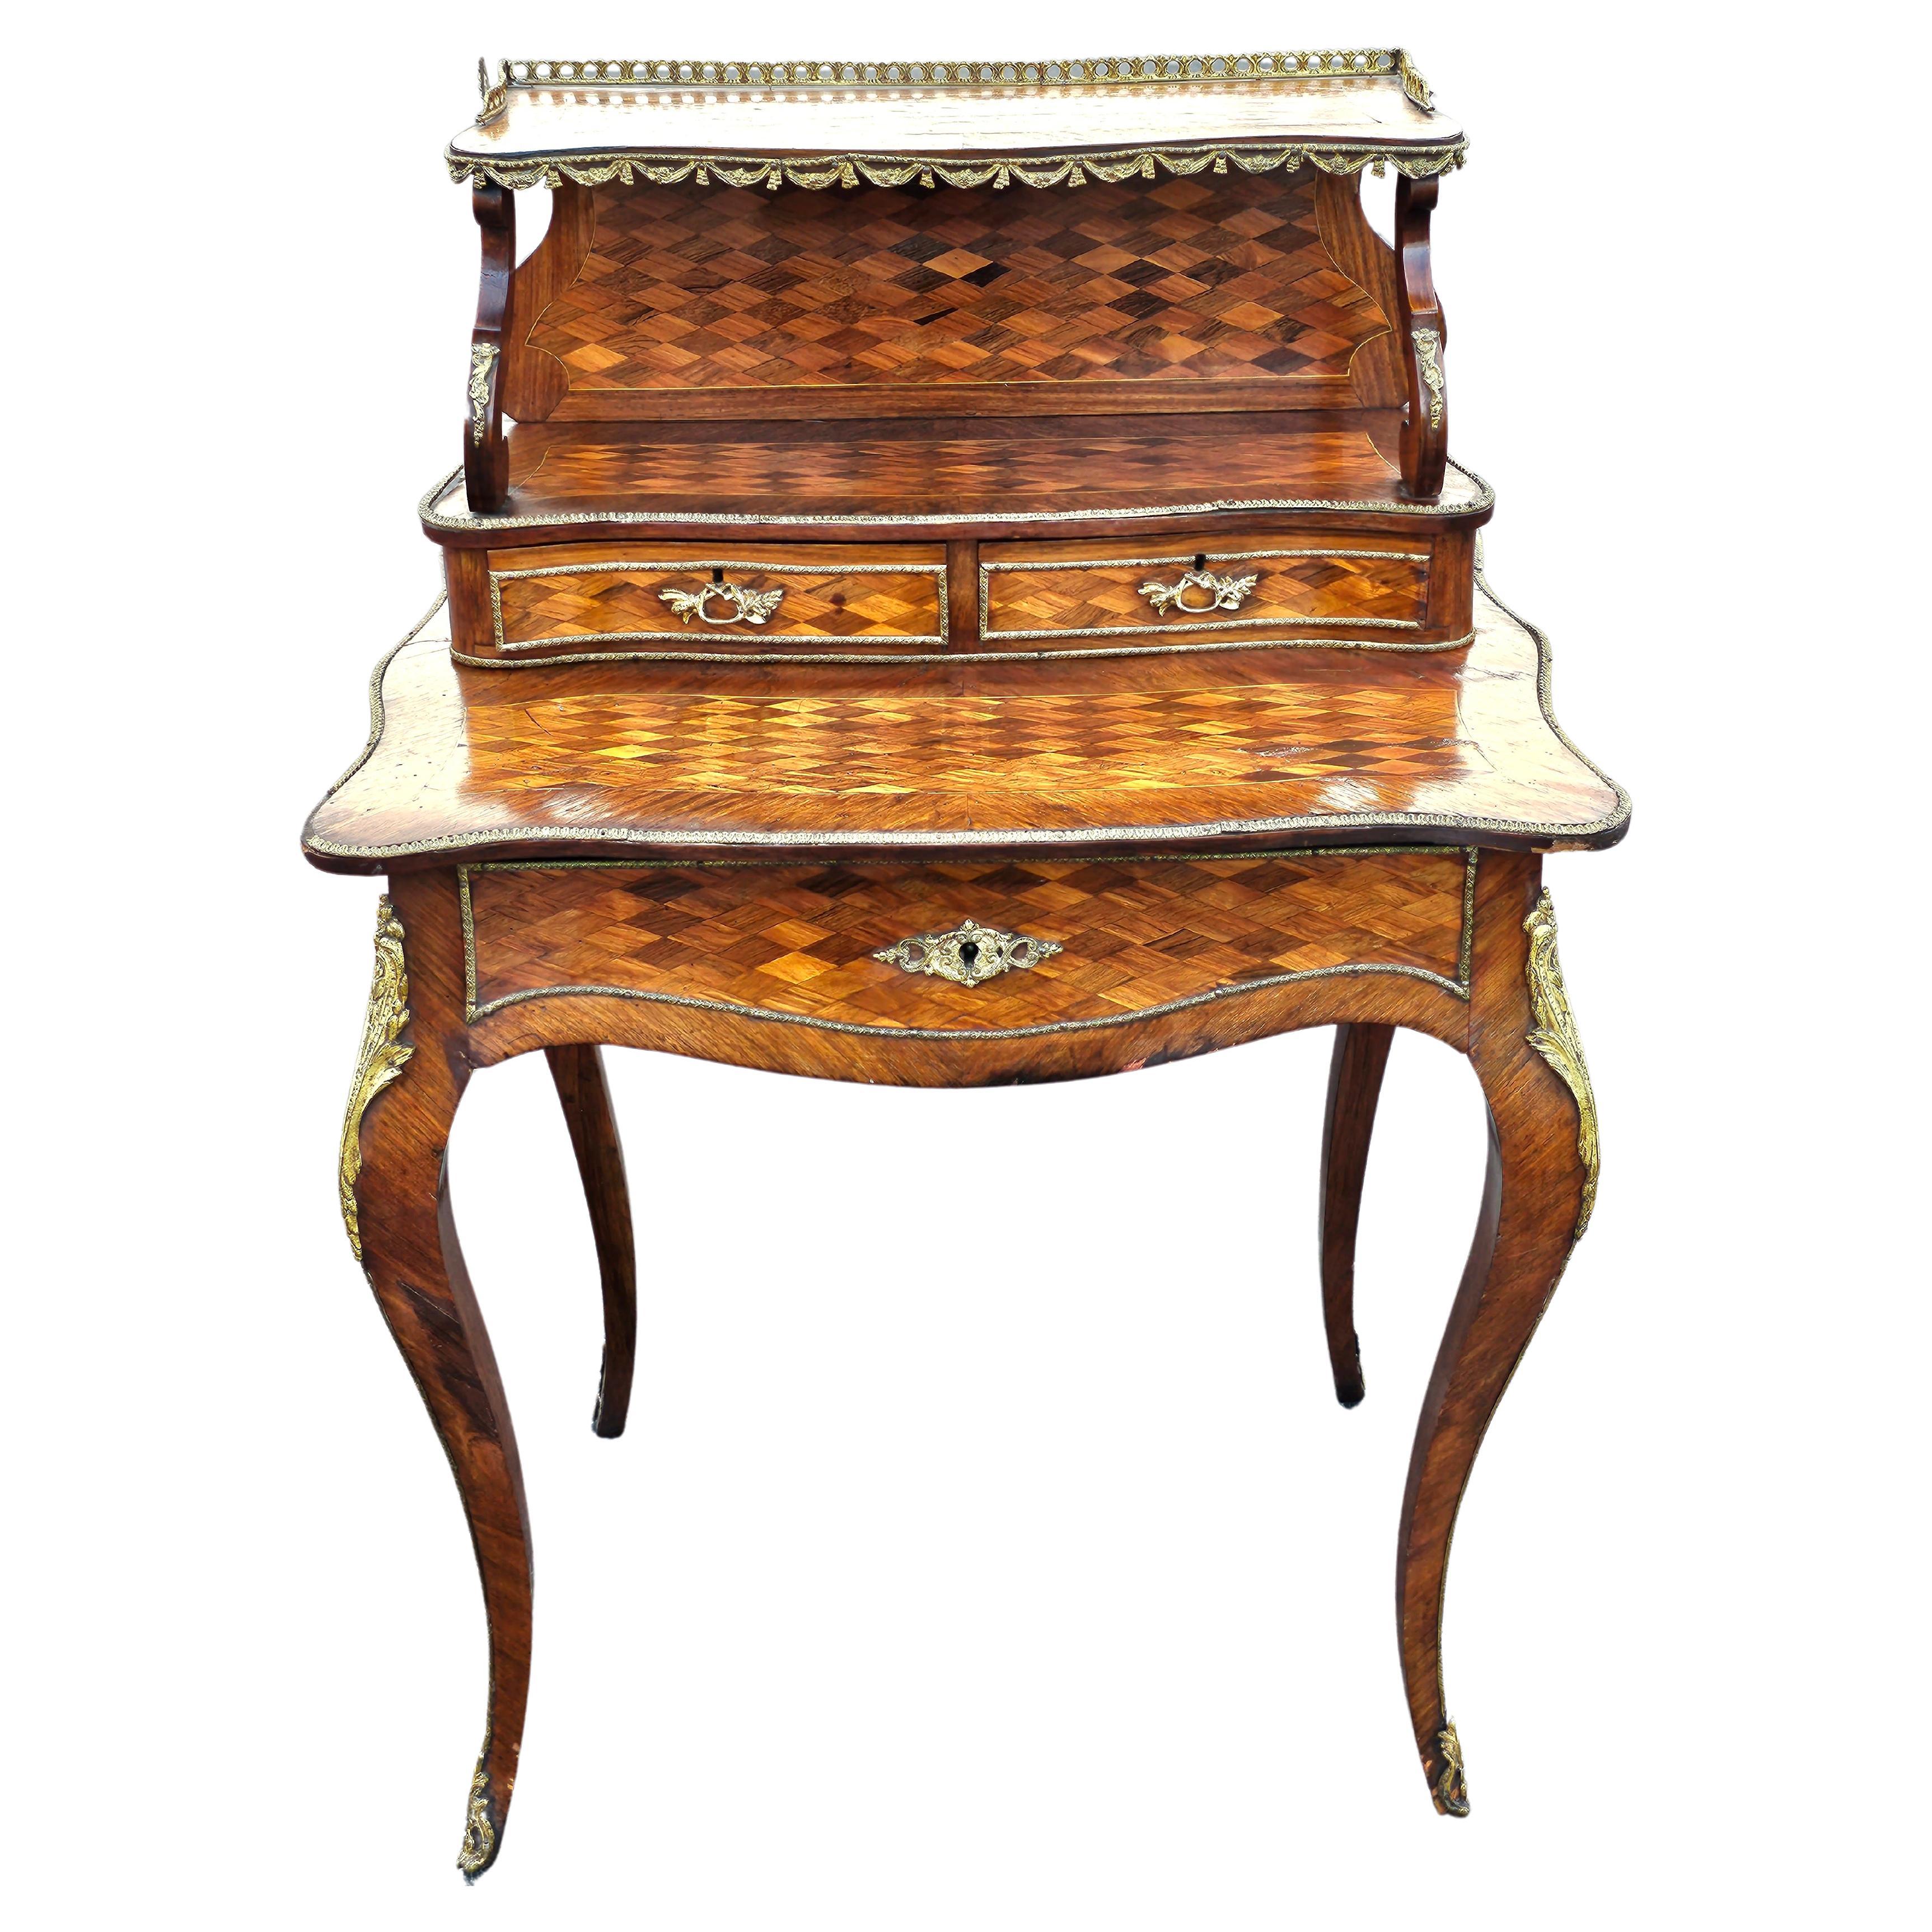 French 19th C. Louis XV Style Kingwood Marquetry & Ormolu Bonheur Du Jour Writing Desk For Sale